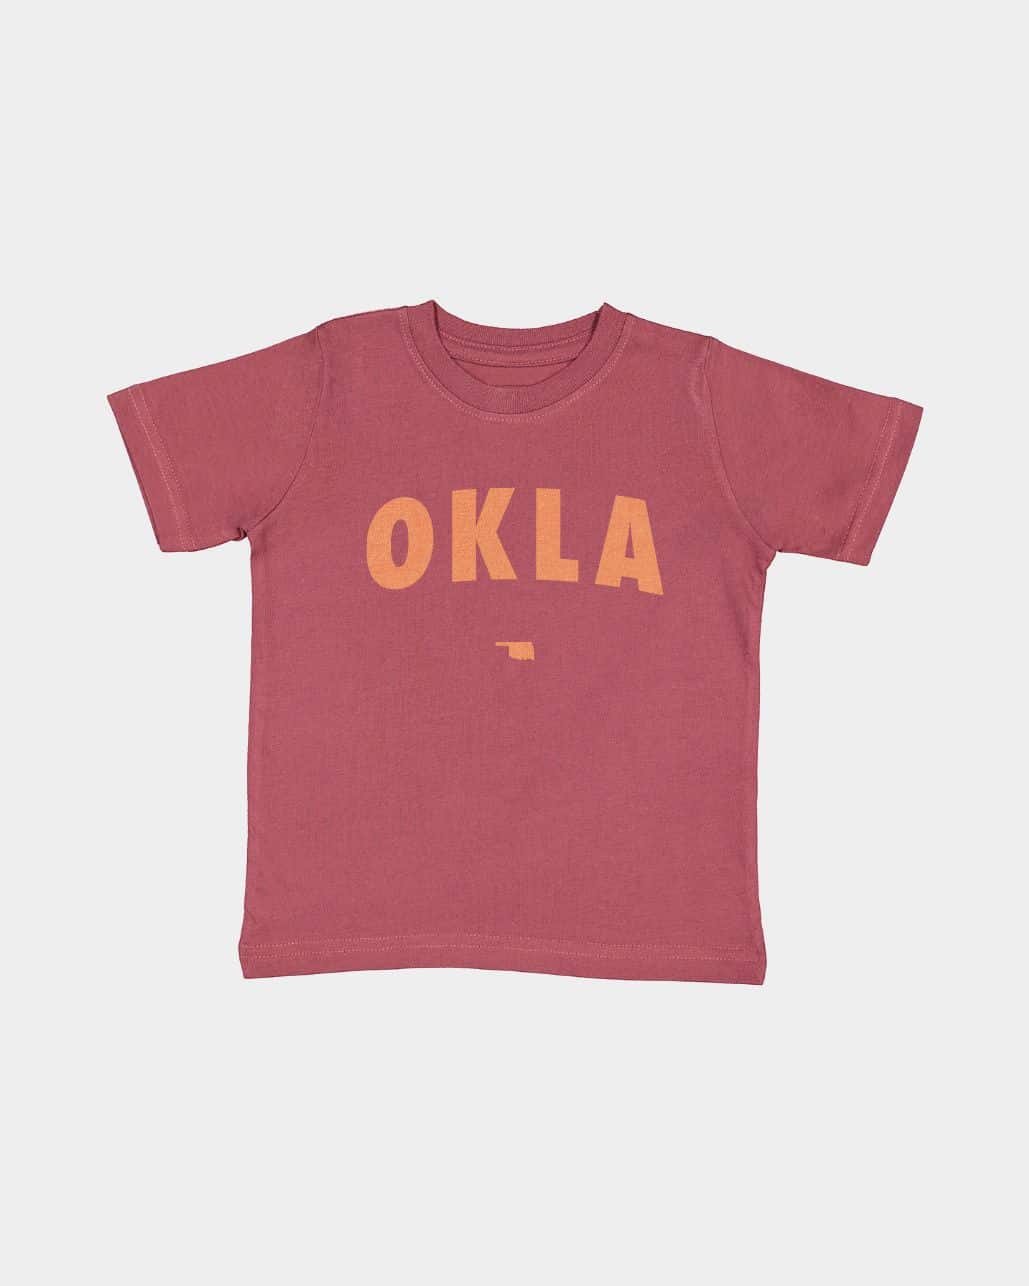 OKLA Kids Tee